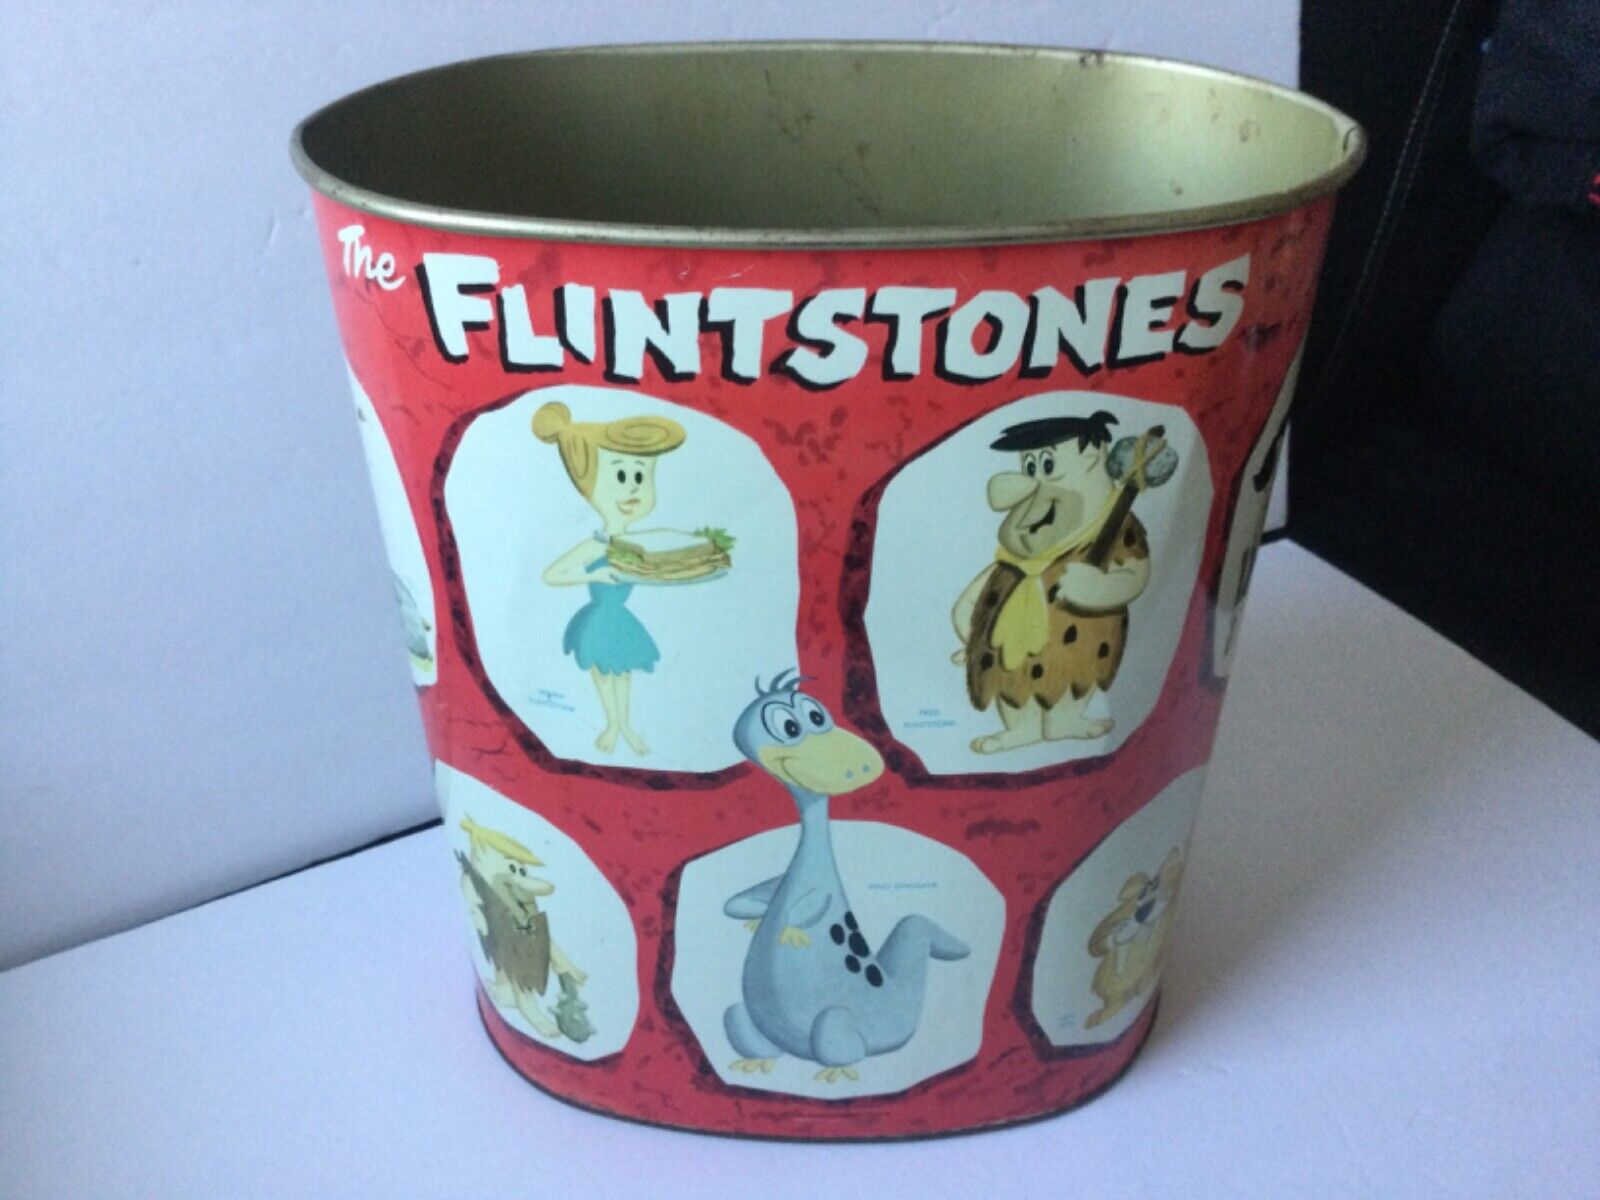 1960’s The Flintstones Harvell-Kilgore Tin Trash Can Hanna-Barbera. Nice example